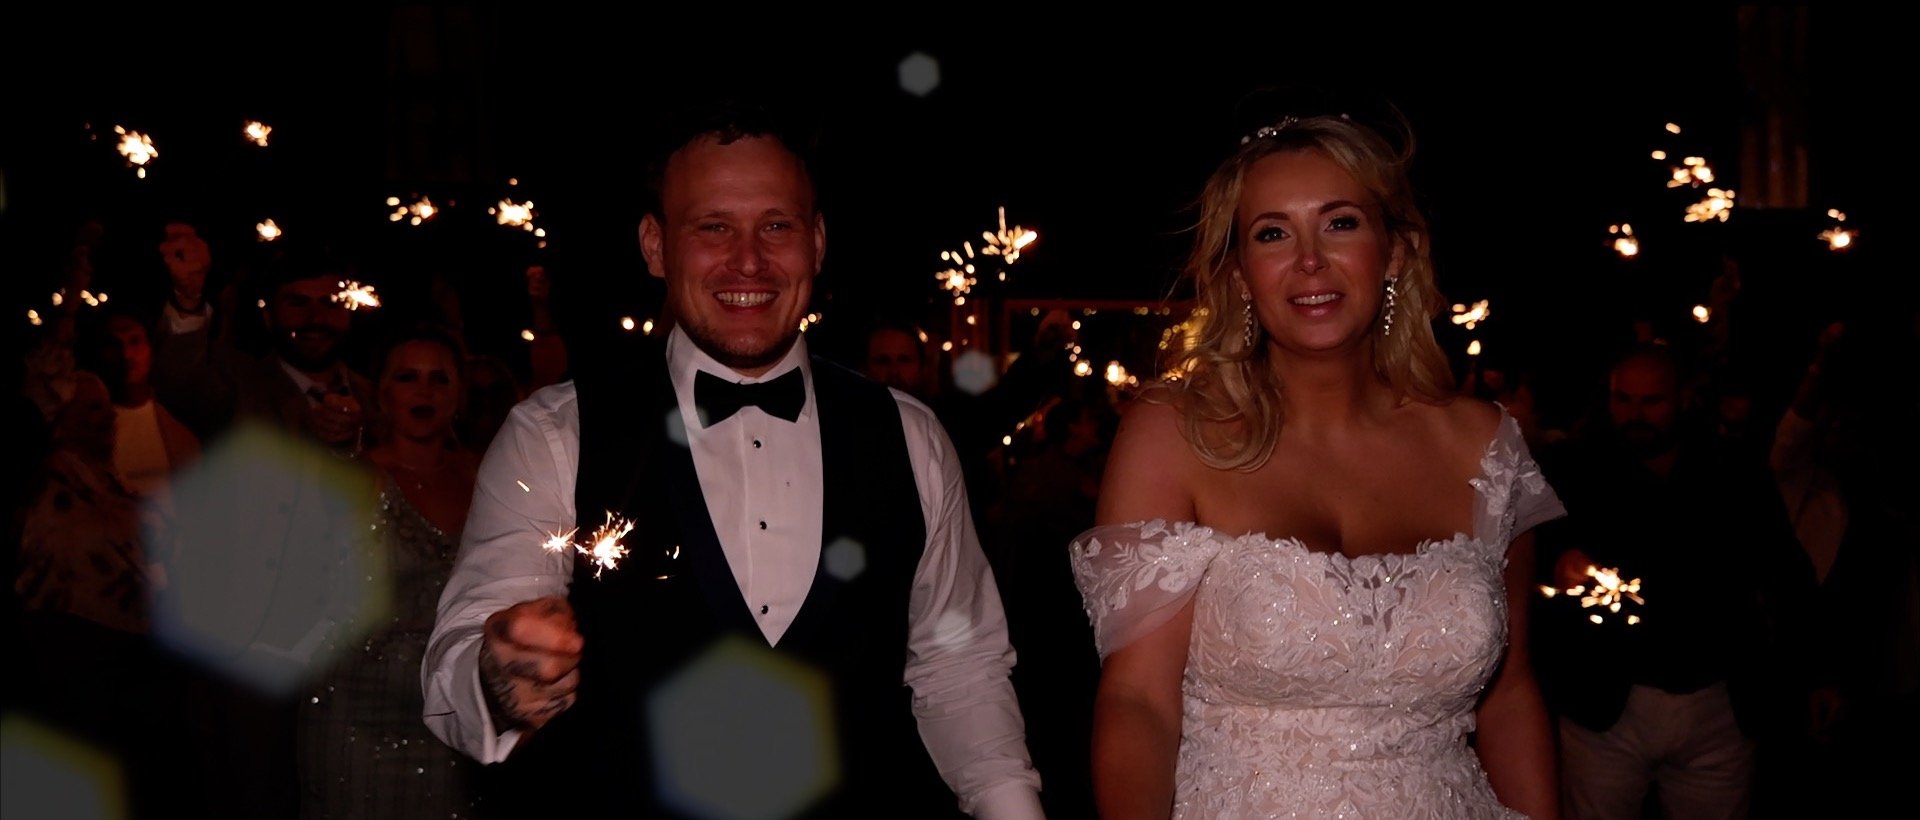 Crondon Park Wedding Videography - 3 Cheers Media - Sparklers.jpg